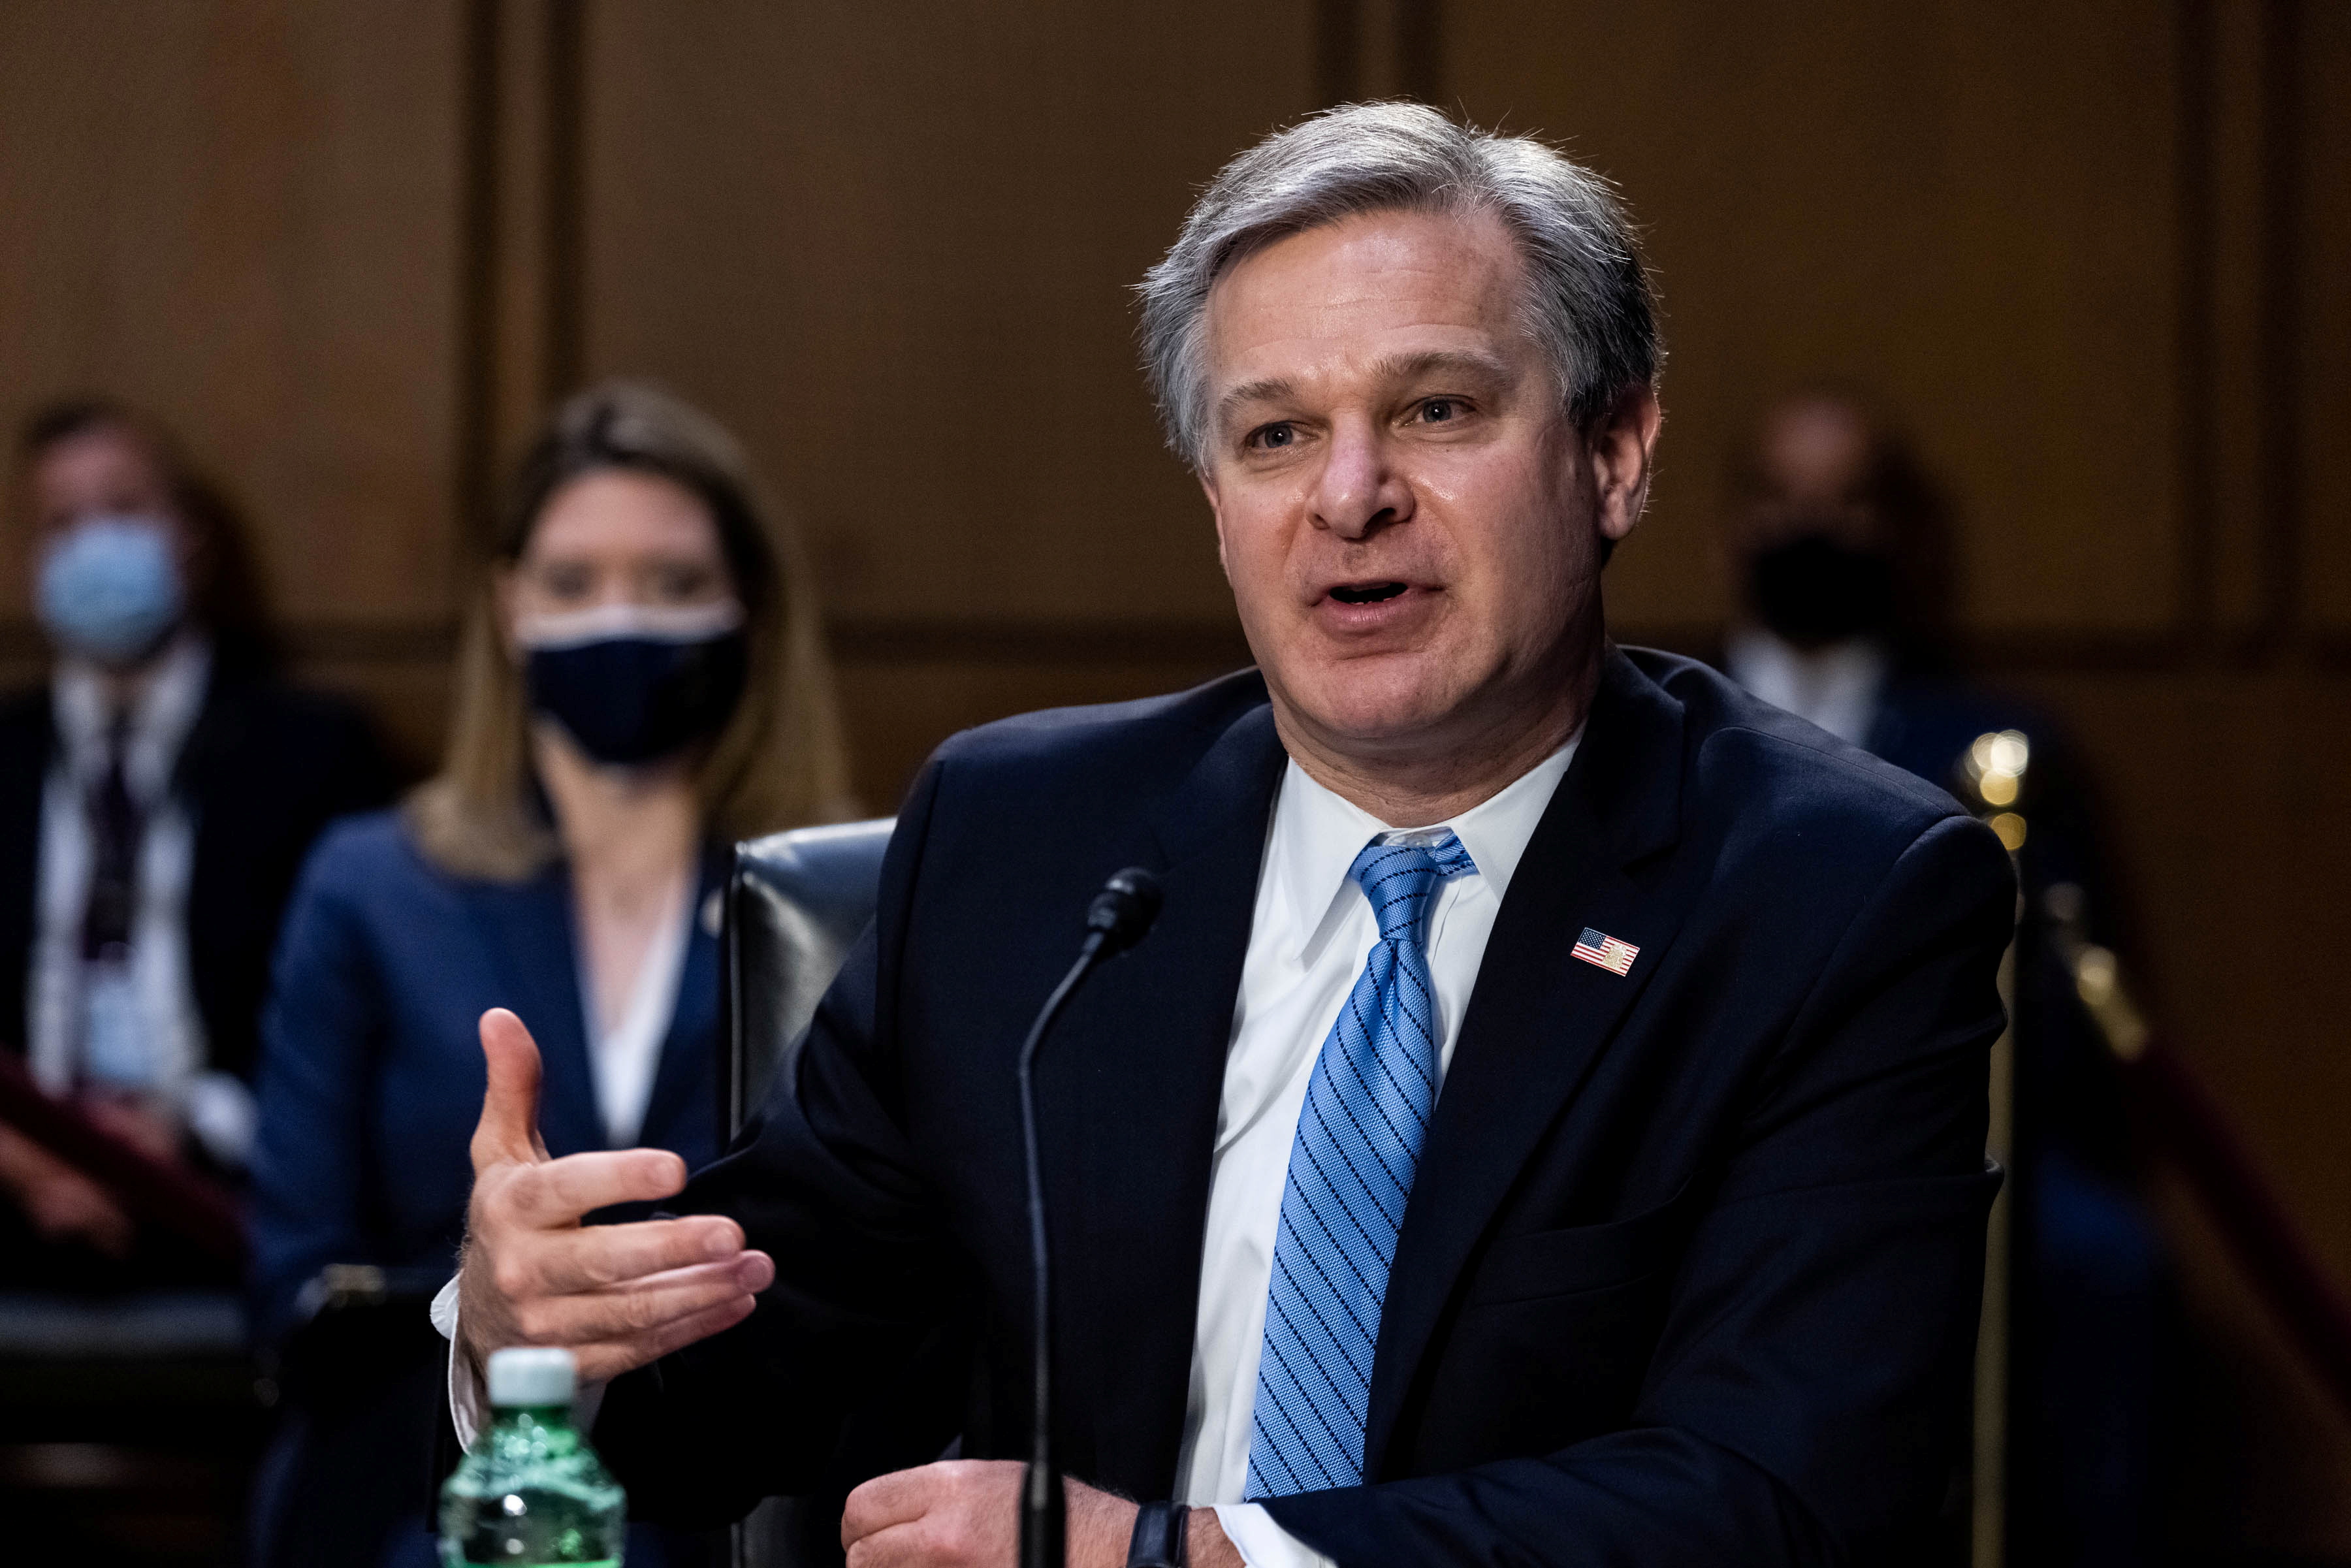 Democrats Raise New Concerns About FBI Background Check Of Brett Kavanaugh